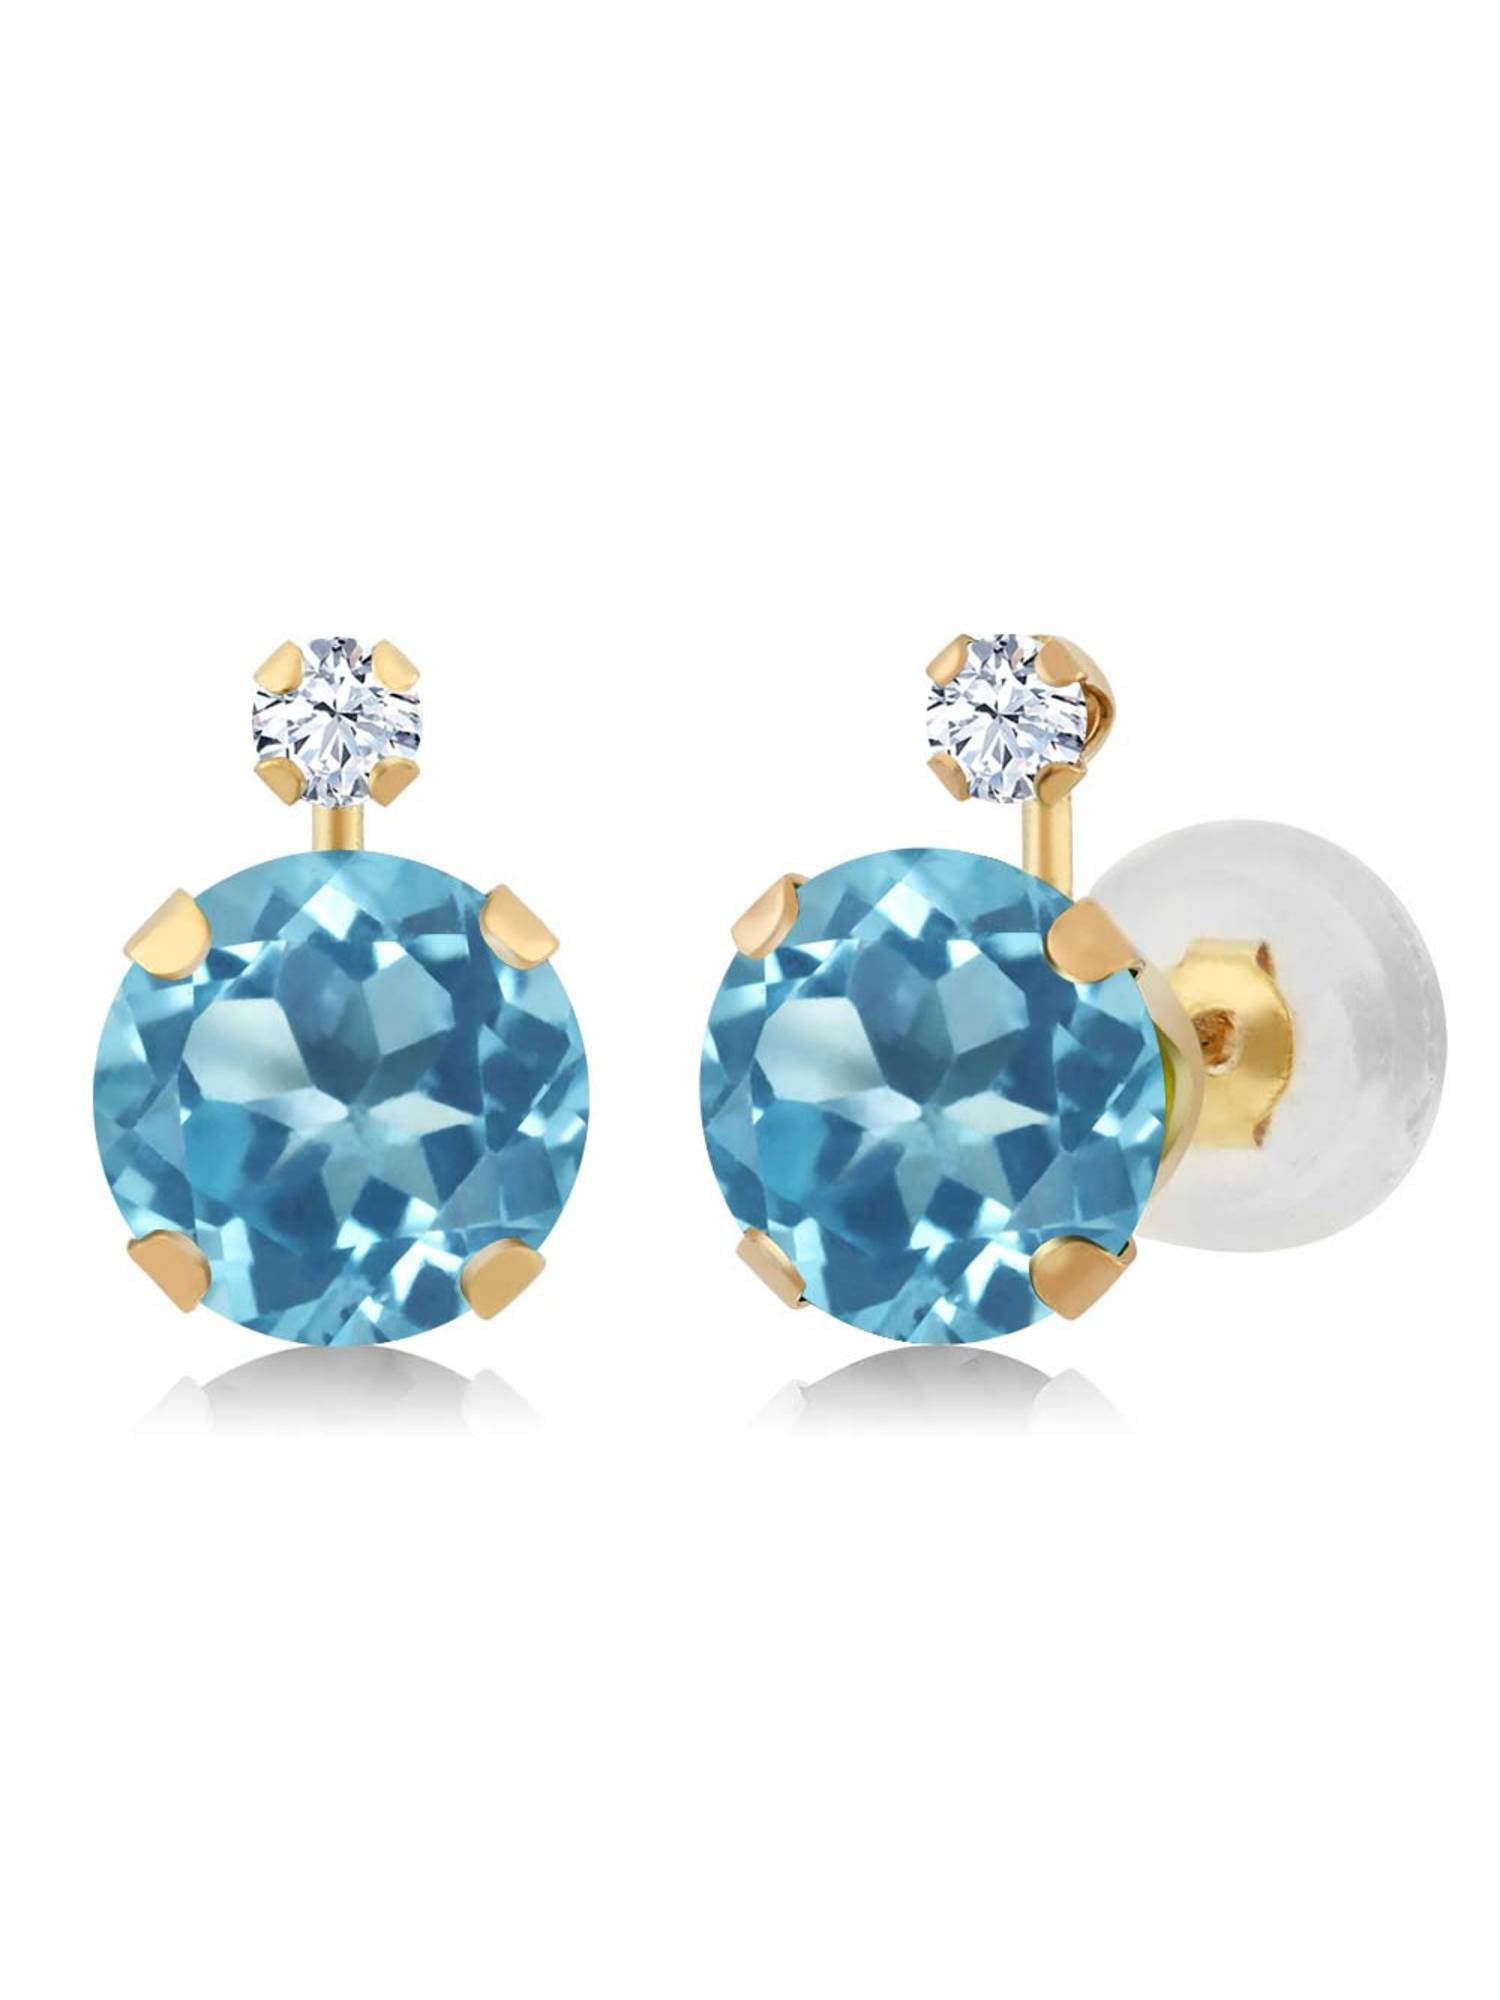 Gem Stone King 2.08 Ct Round Swiss Blue Topaz White Created Sapphire 14K Yellow Gold Earrings